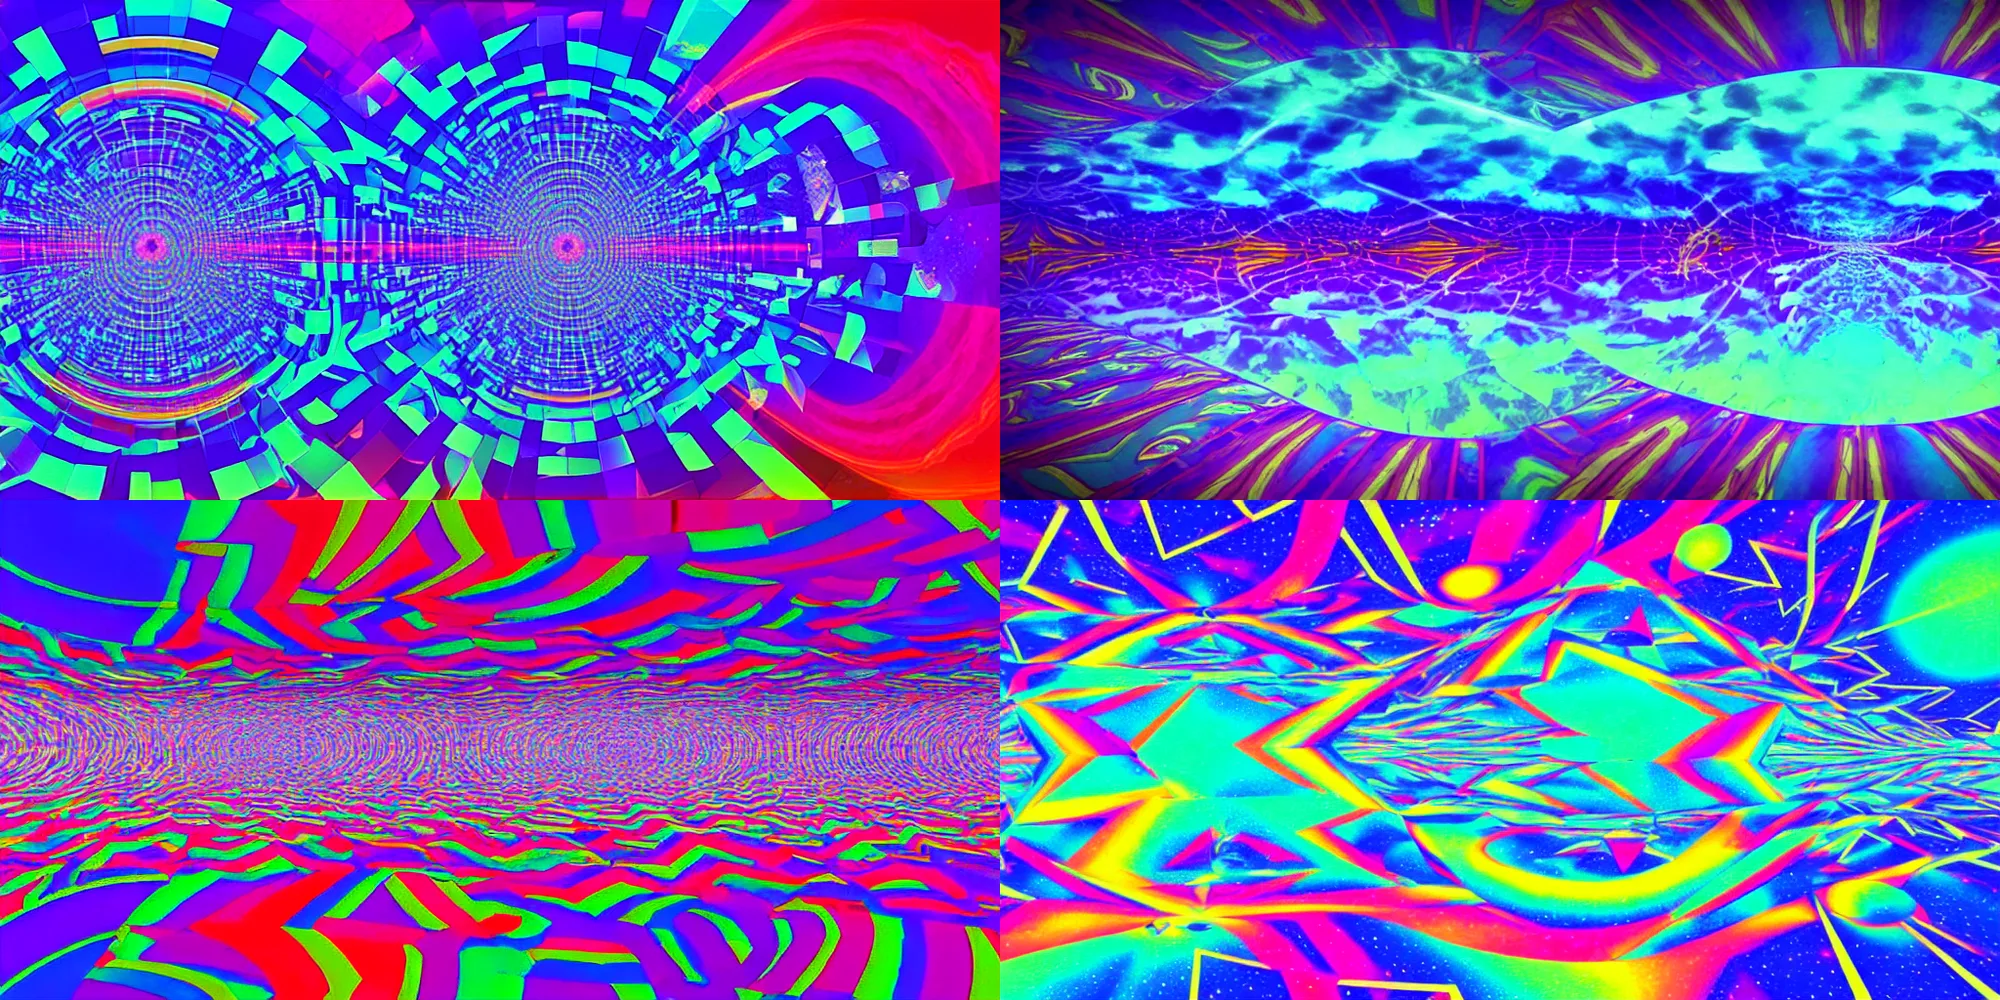 Prompt: 3D astral psychedelic cinema geometric fantasy landscape